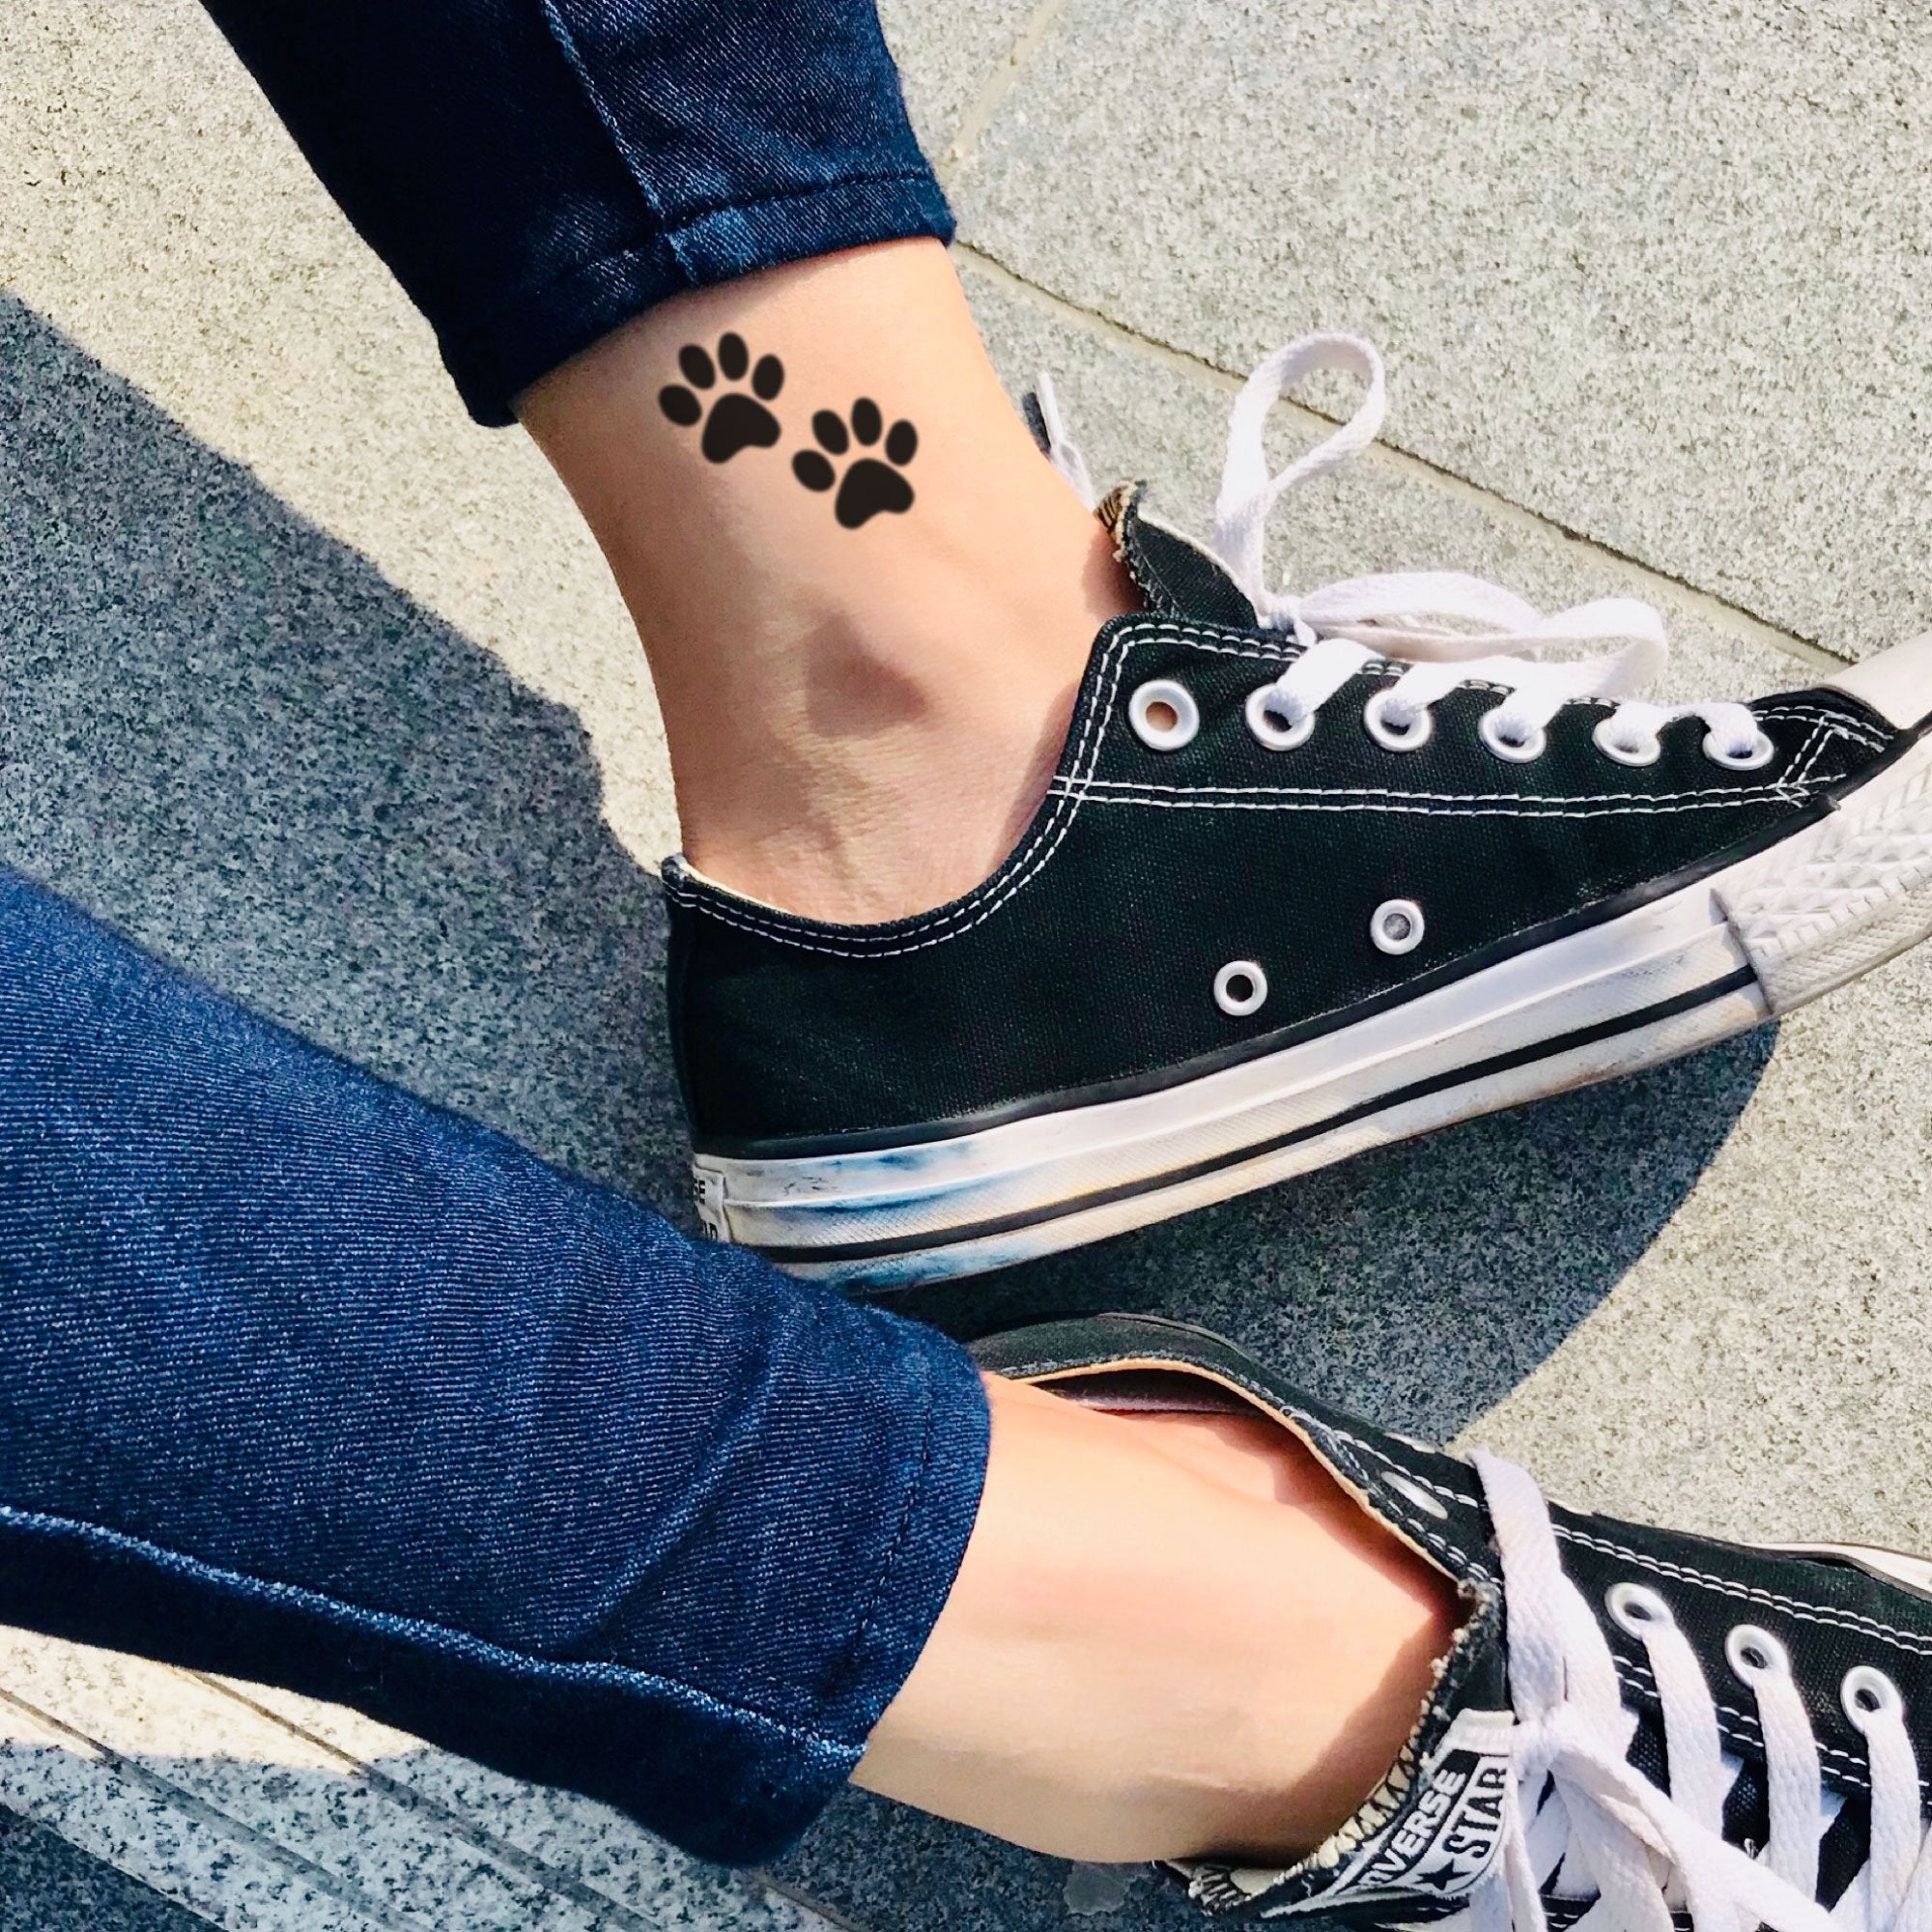 cat paw tattoos in Tattoos  Search in 13M Tattoos Now  Tattoodo